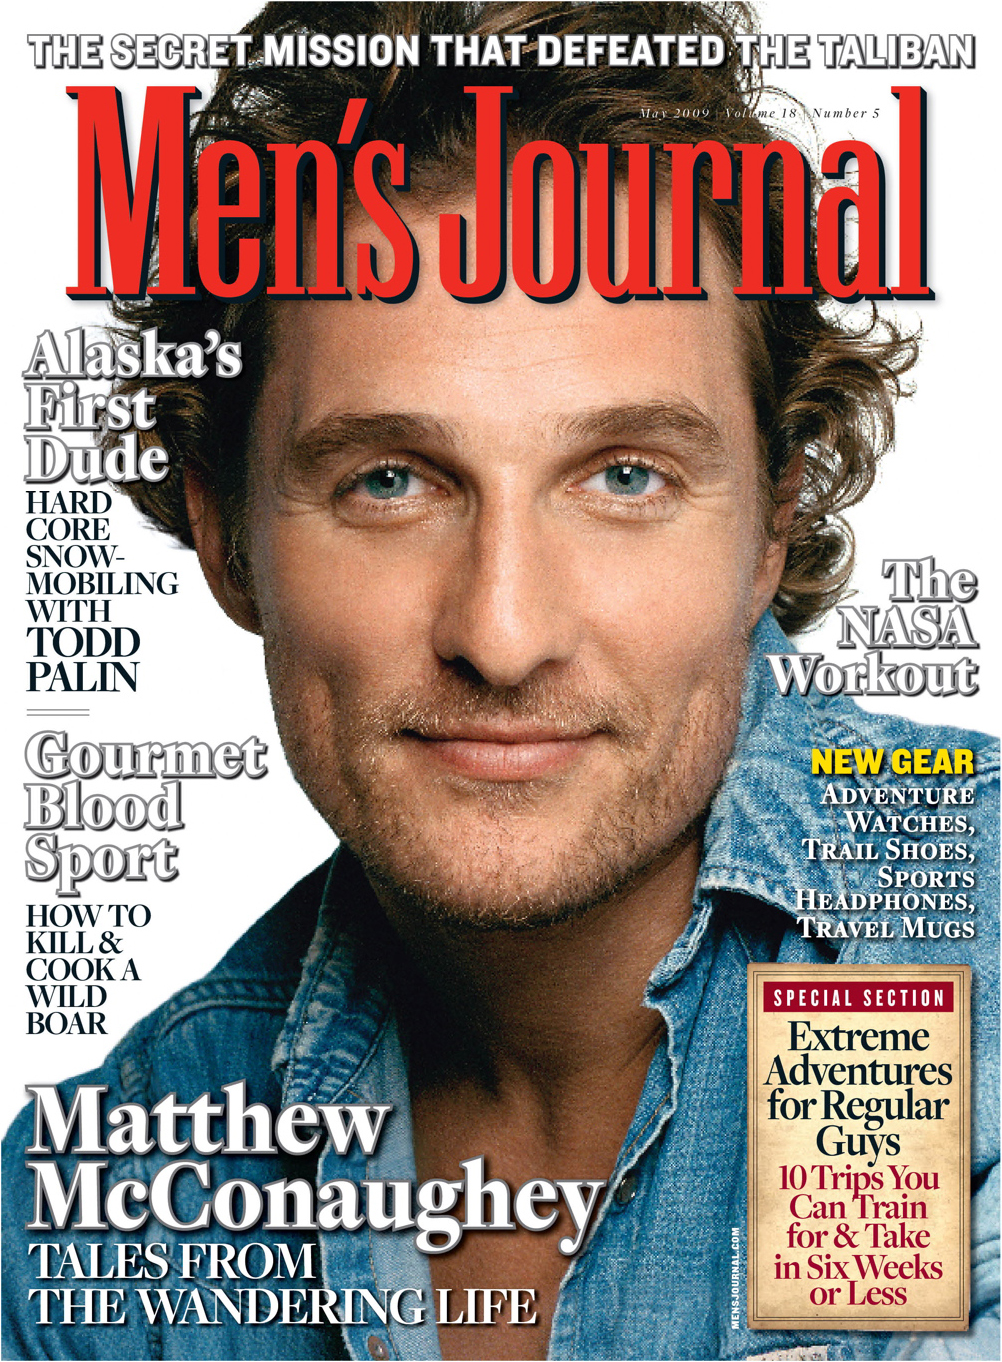 Men's Journal Magazine Subscription just $3.99/year (Reg. $19.99) TODAY